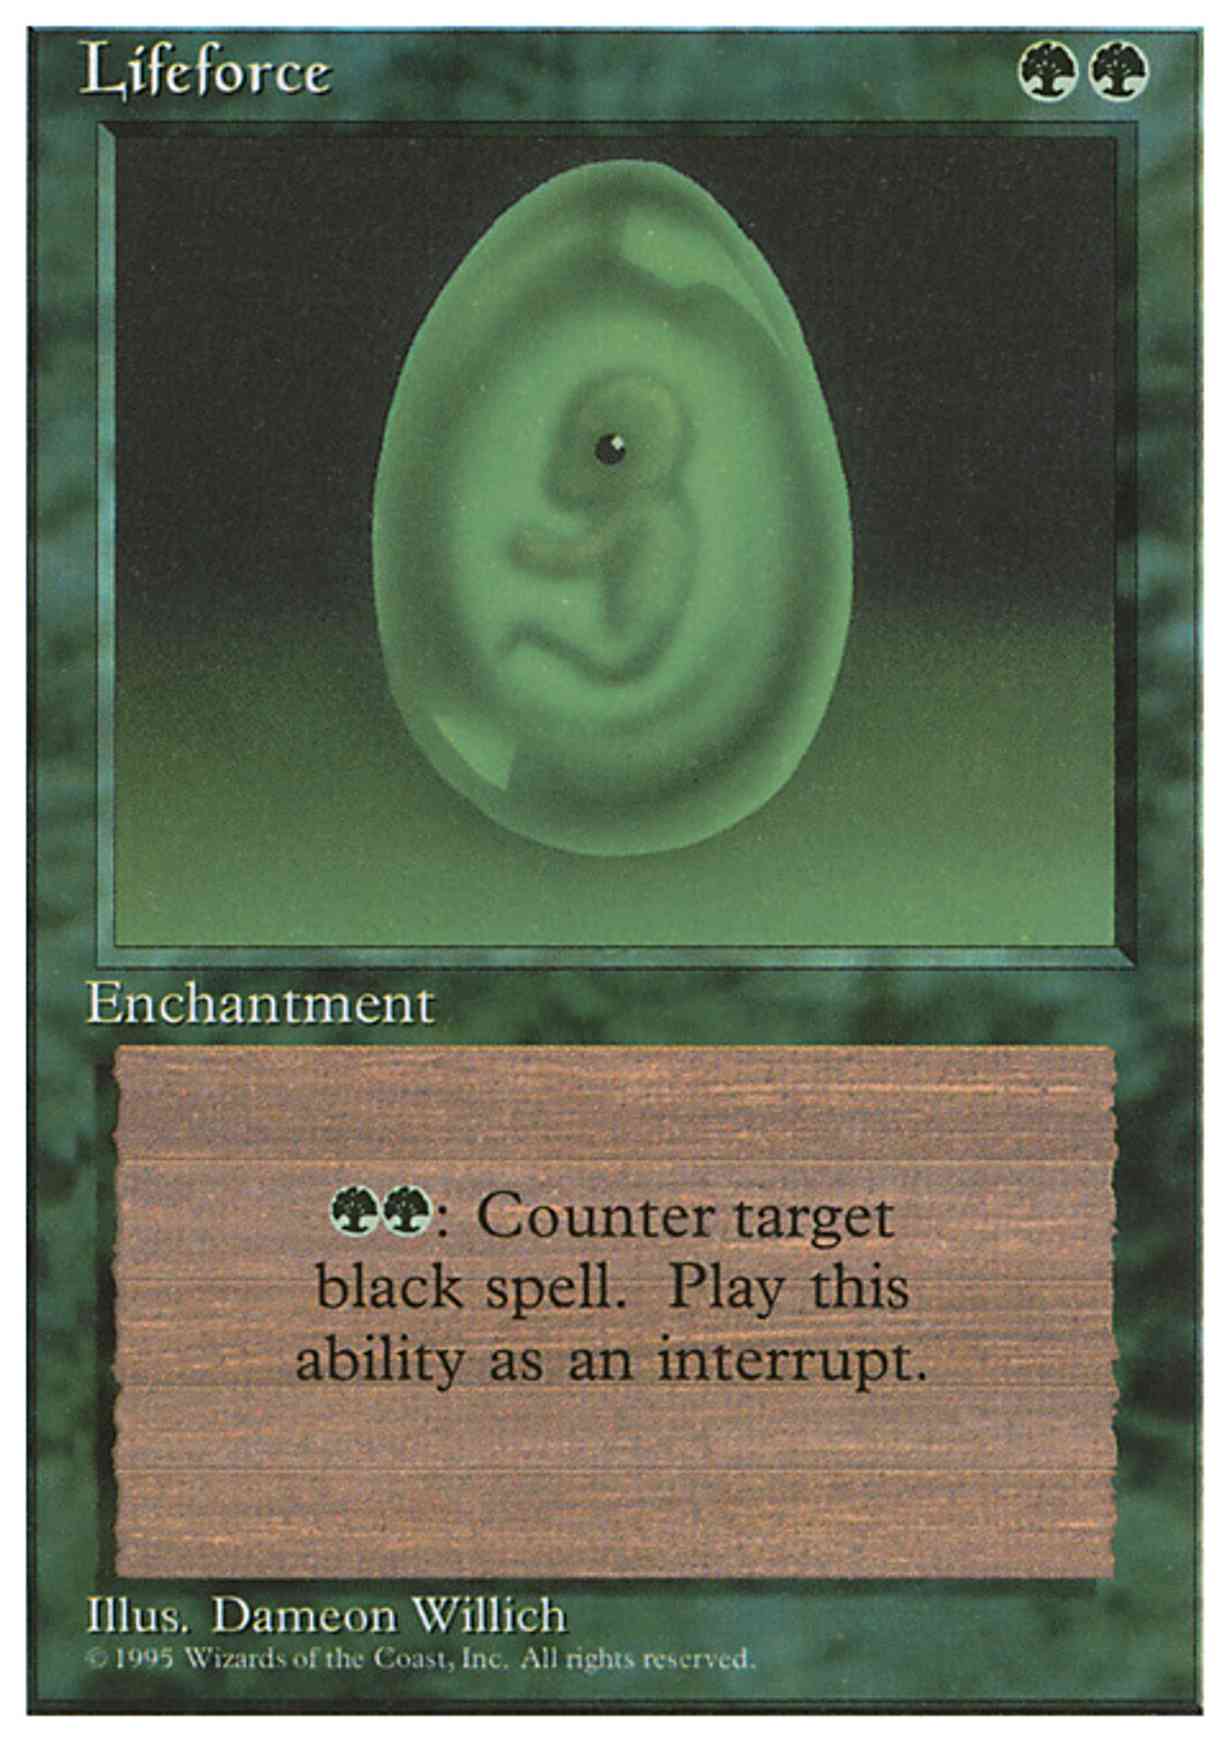 Lifeforce magic card front